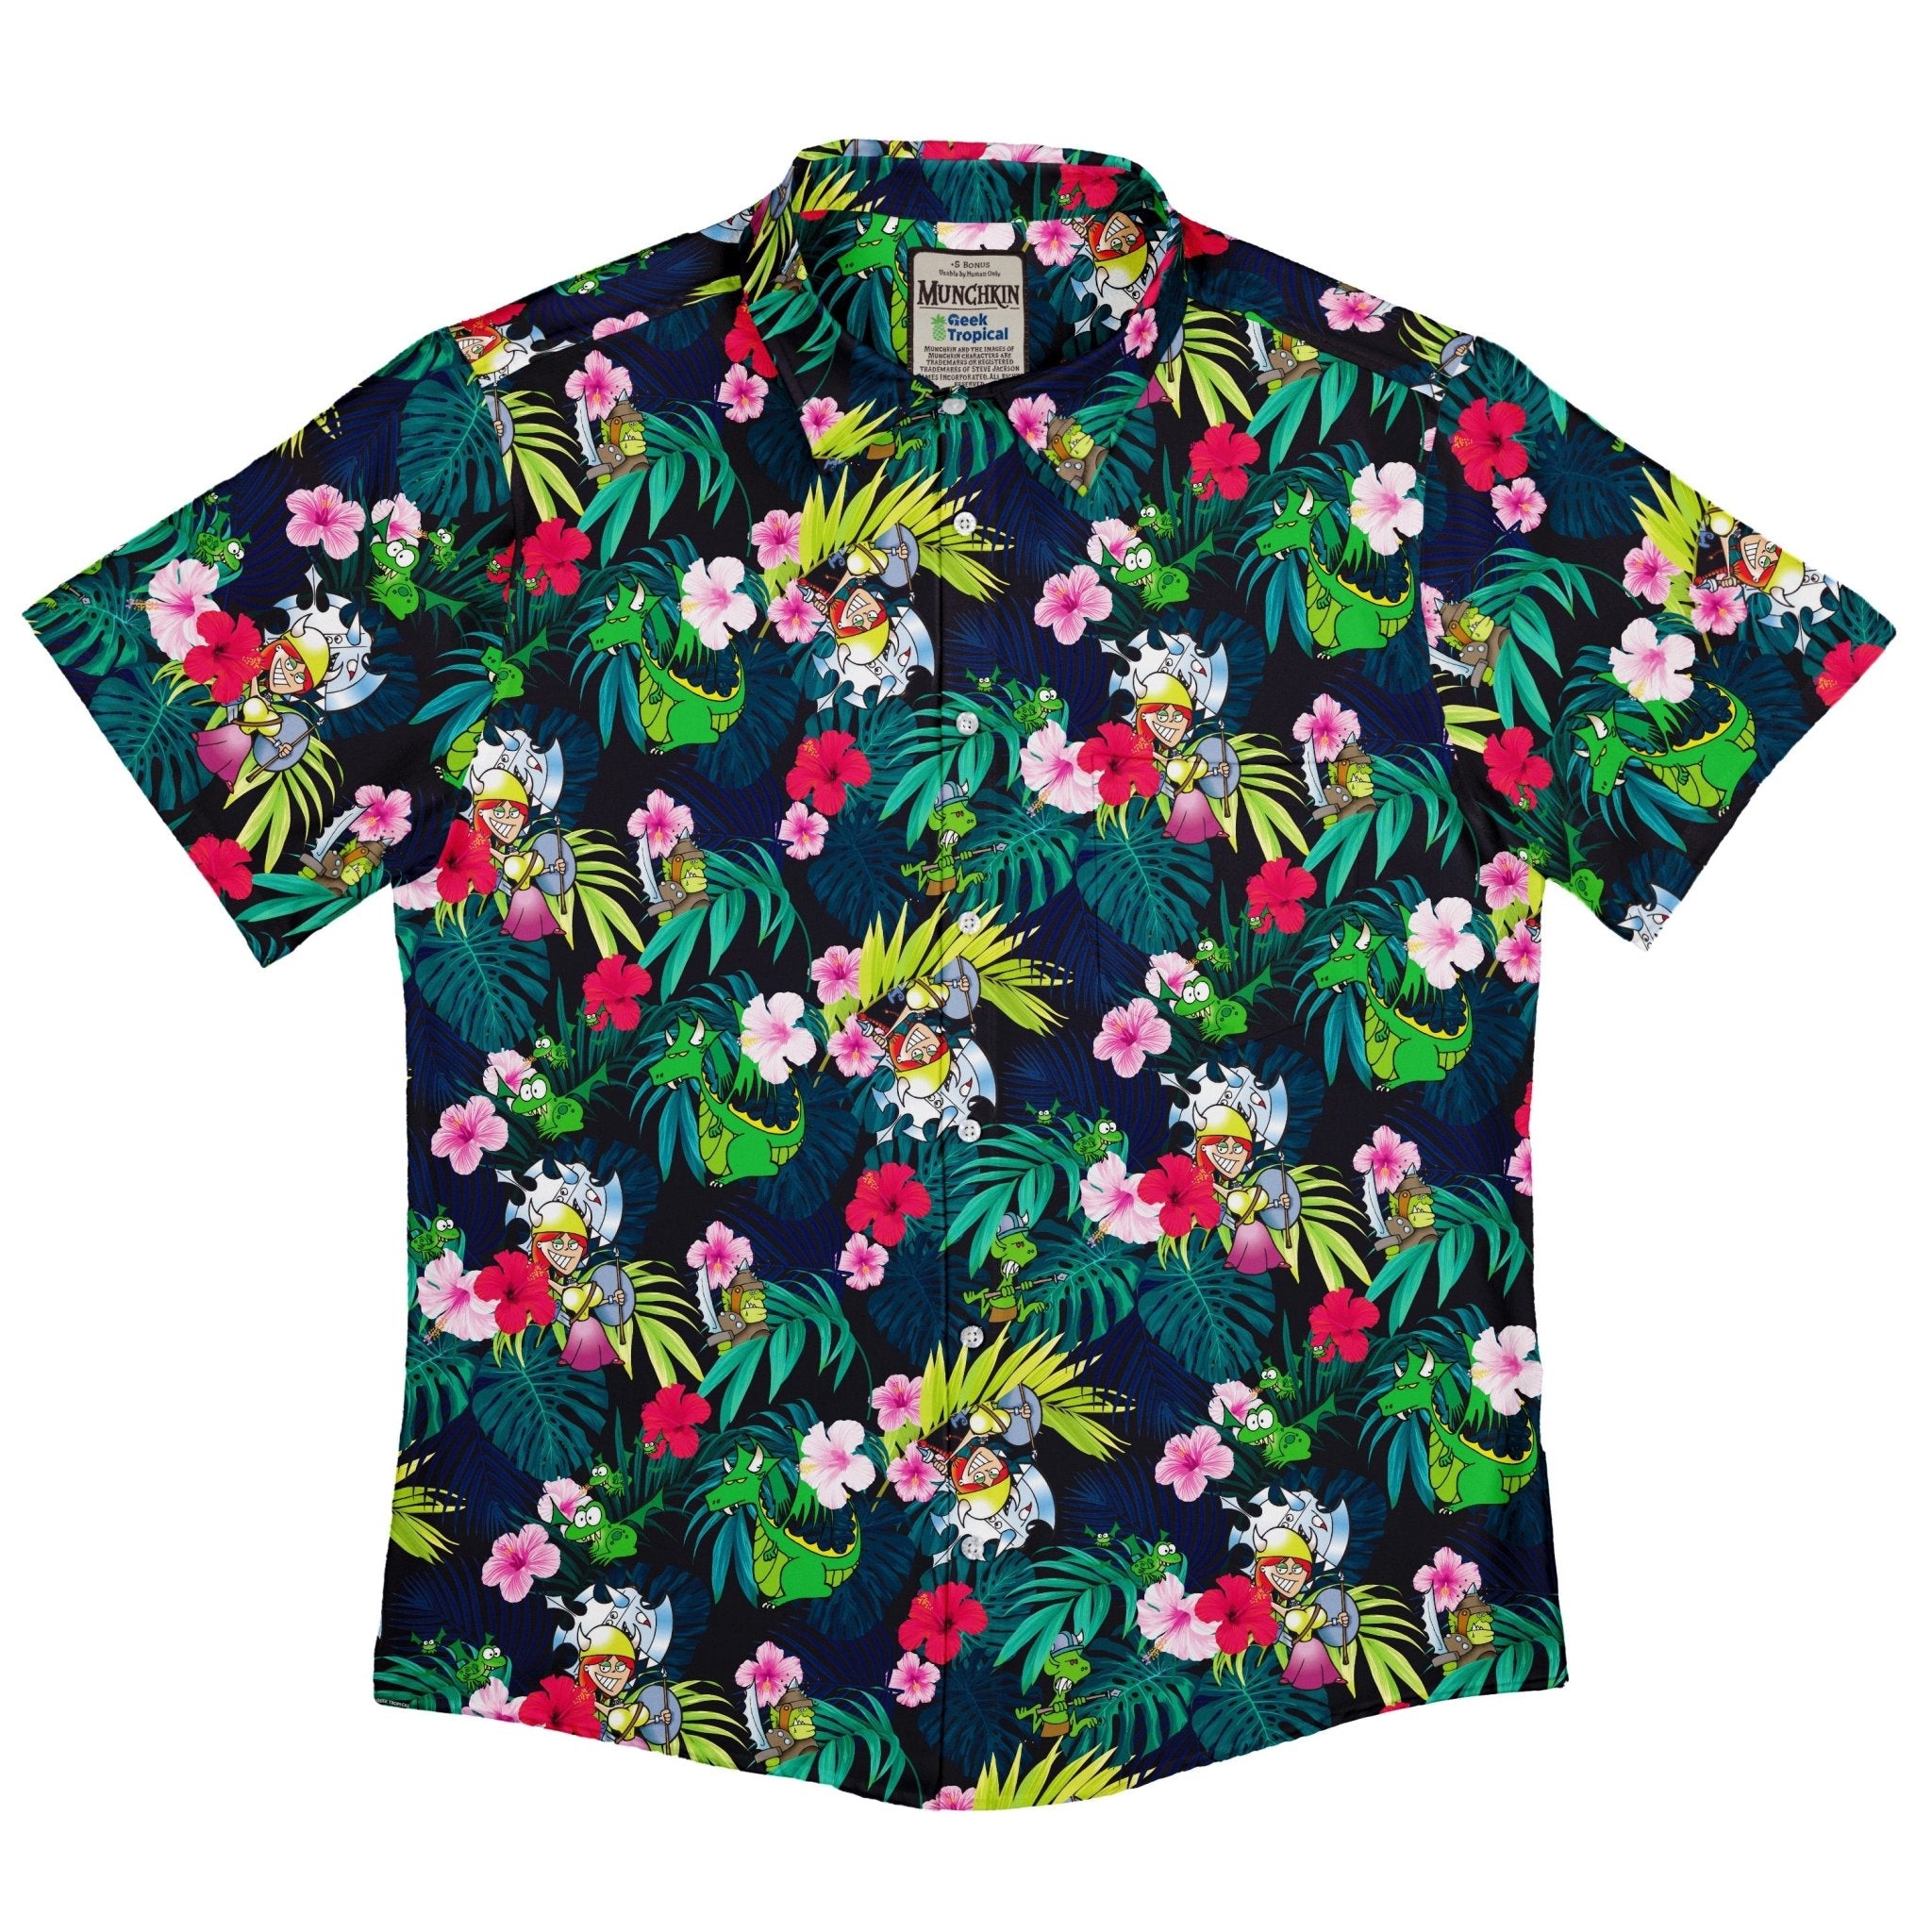 Munchkin Tropical Flower Button Up Shirt - board game print - Design by Claire Murphy - Munchkin print